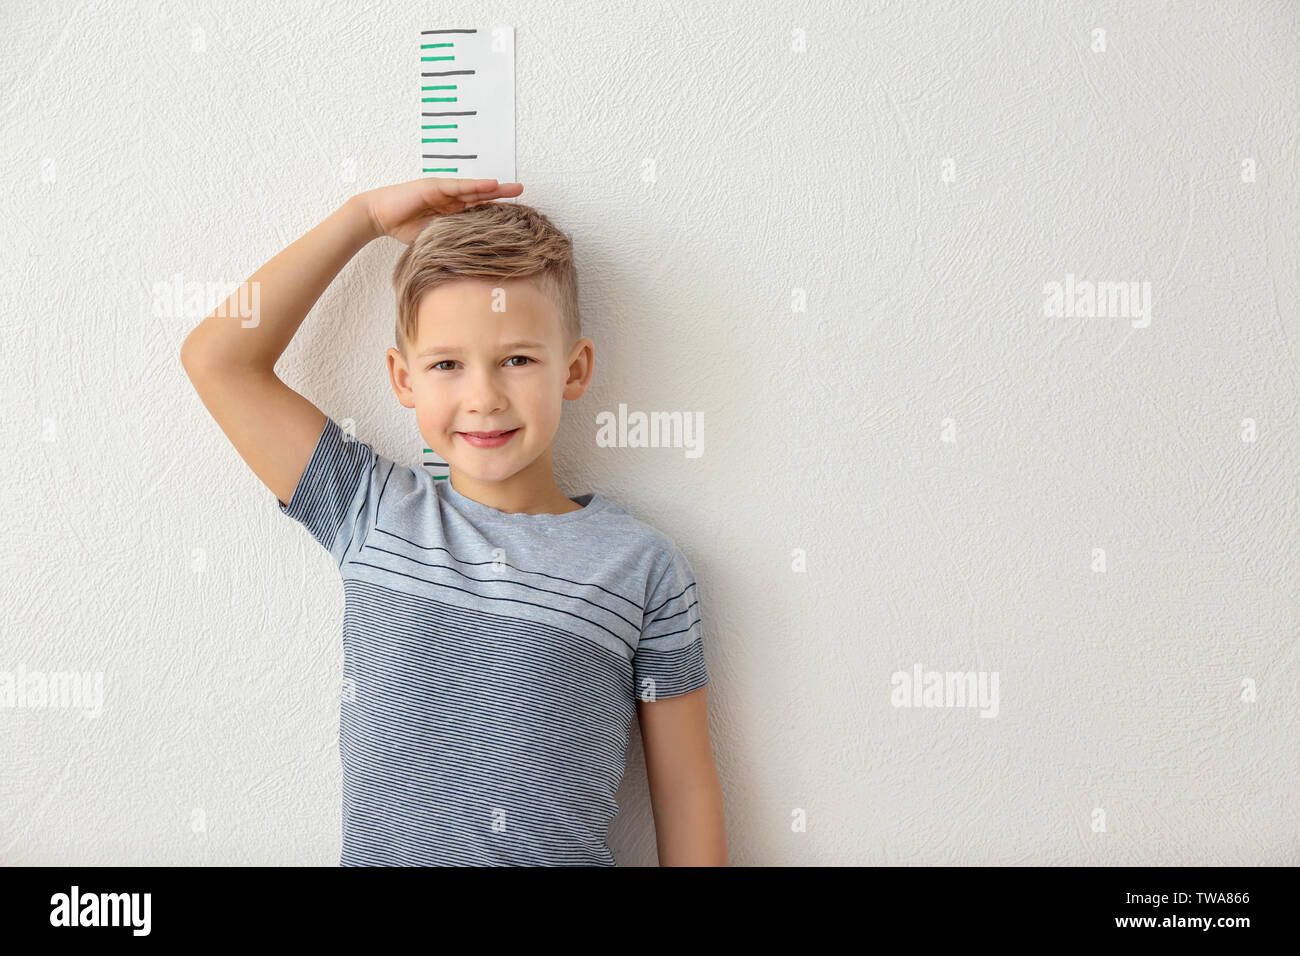 Cute little boy measuring height near light wall Stock Photo